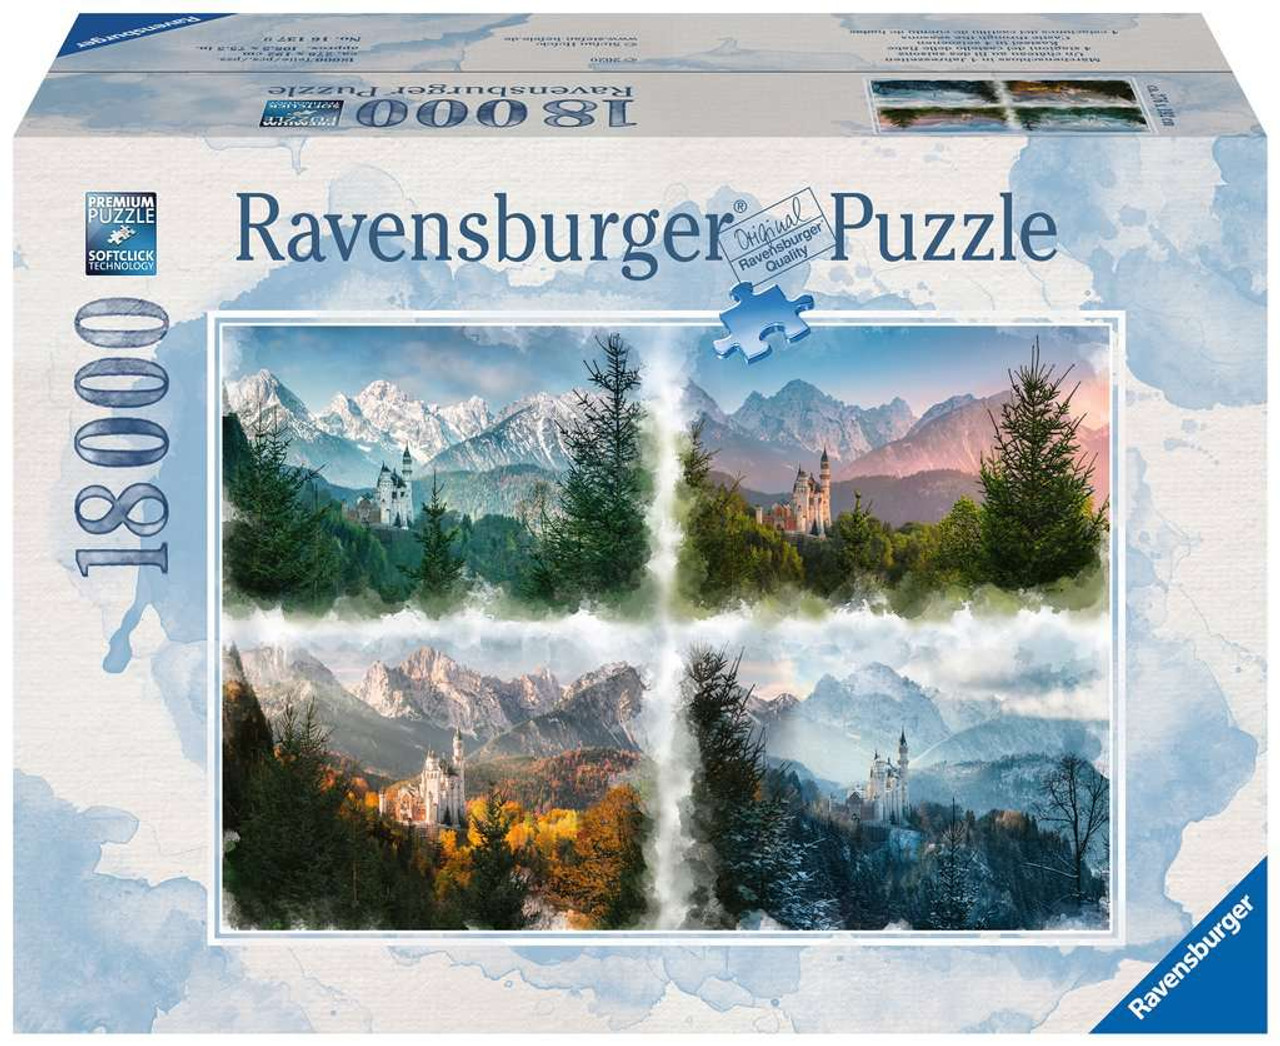 1000 Piece Neuschwanstein Castle Jigsaw Puzzle by Educa Borras